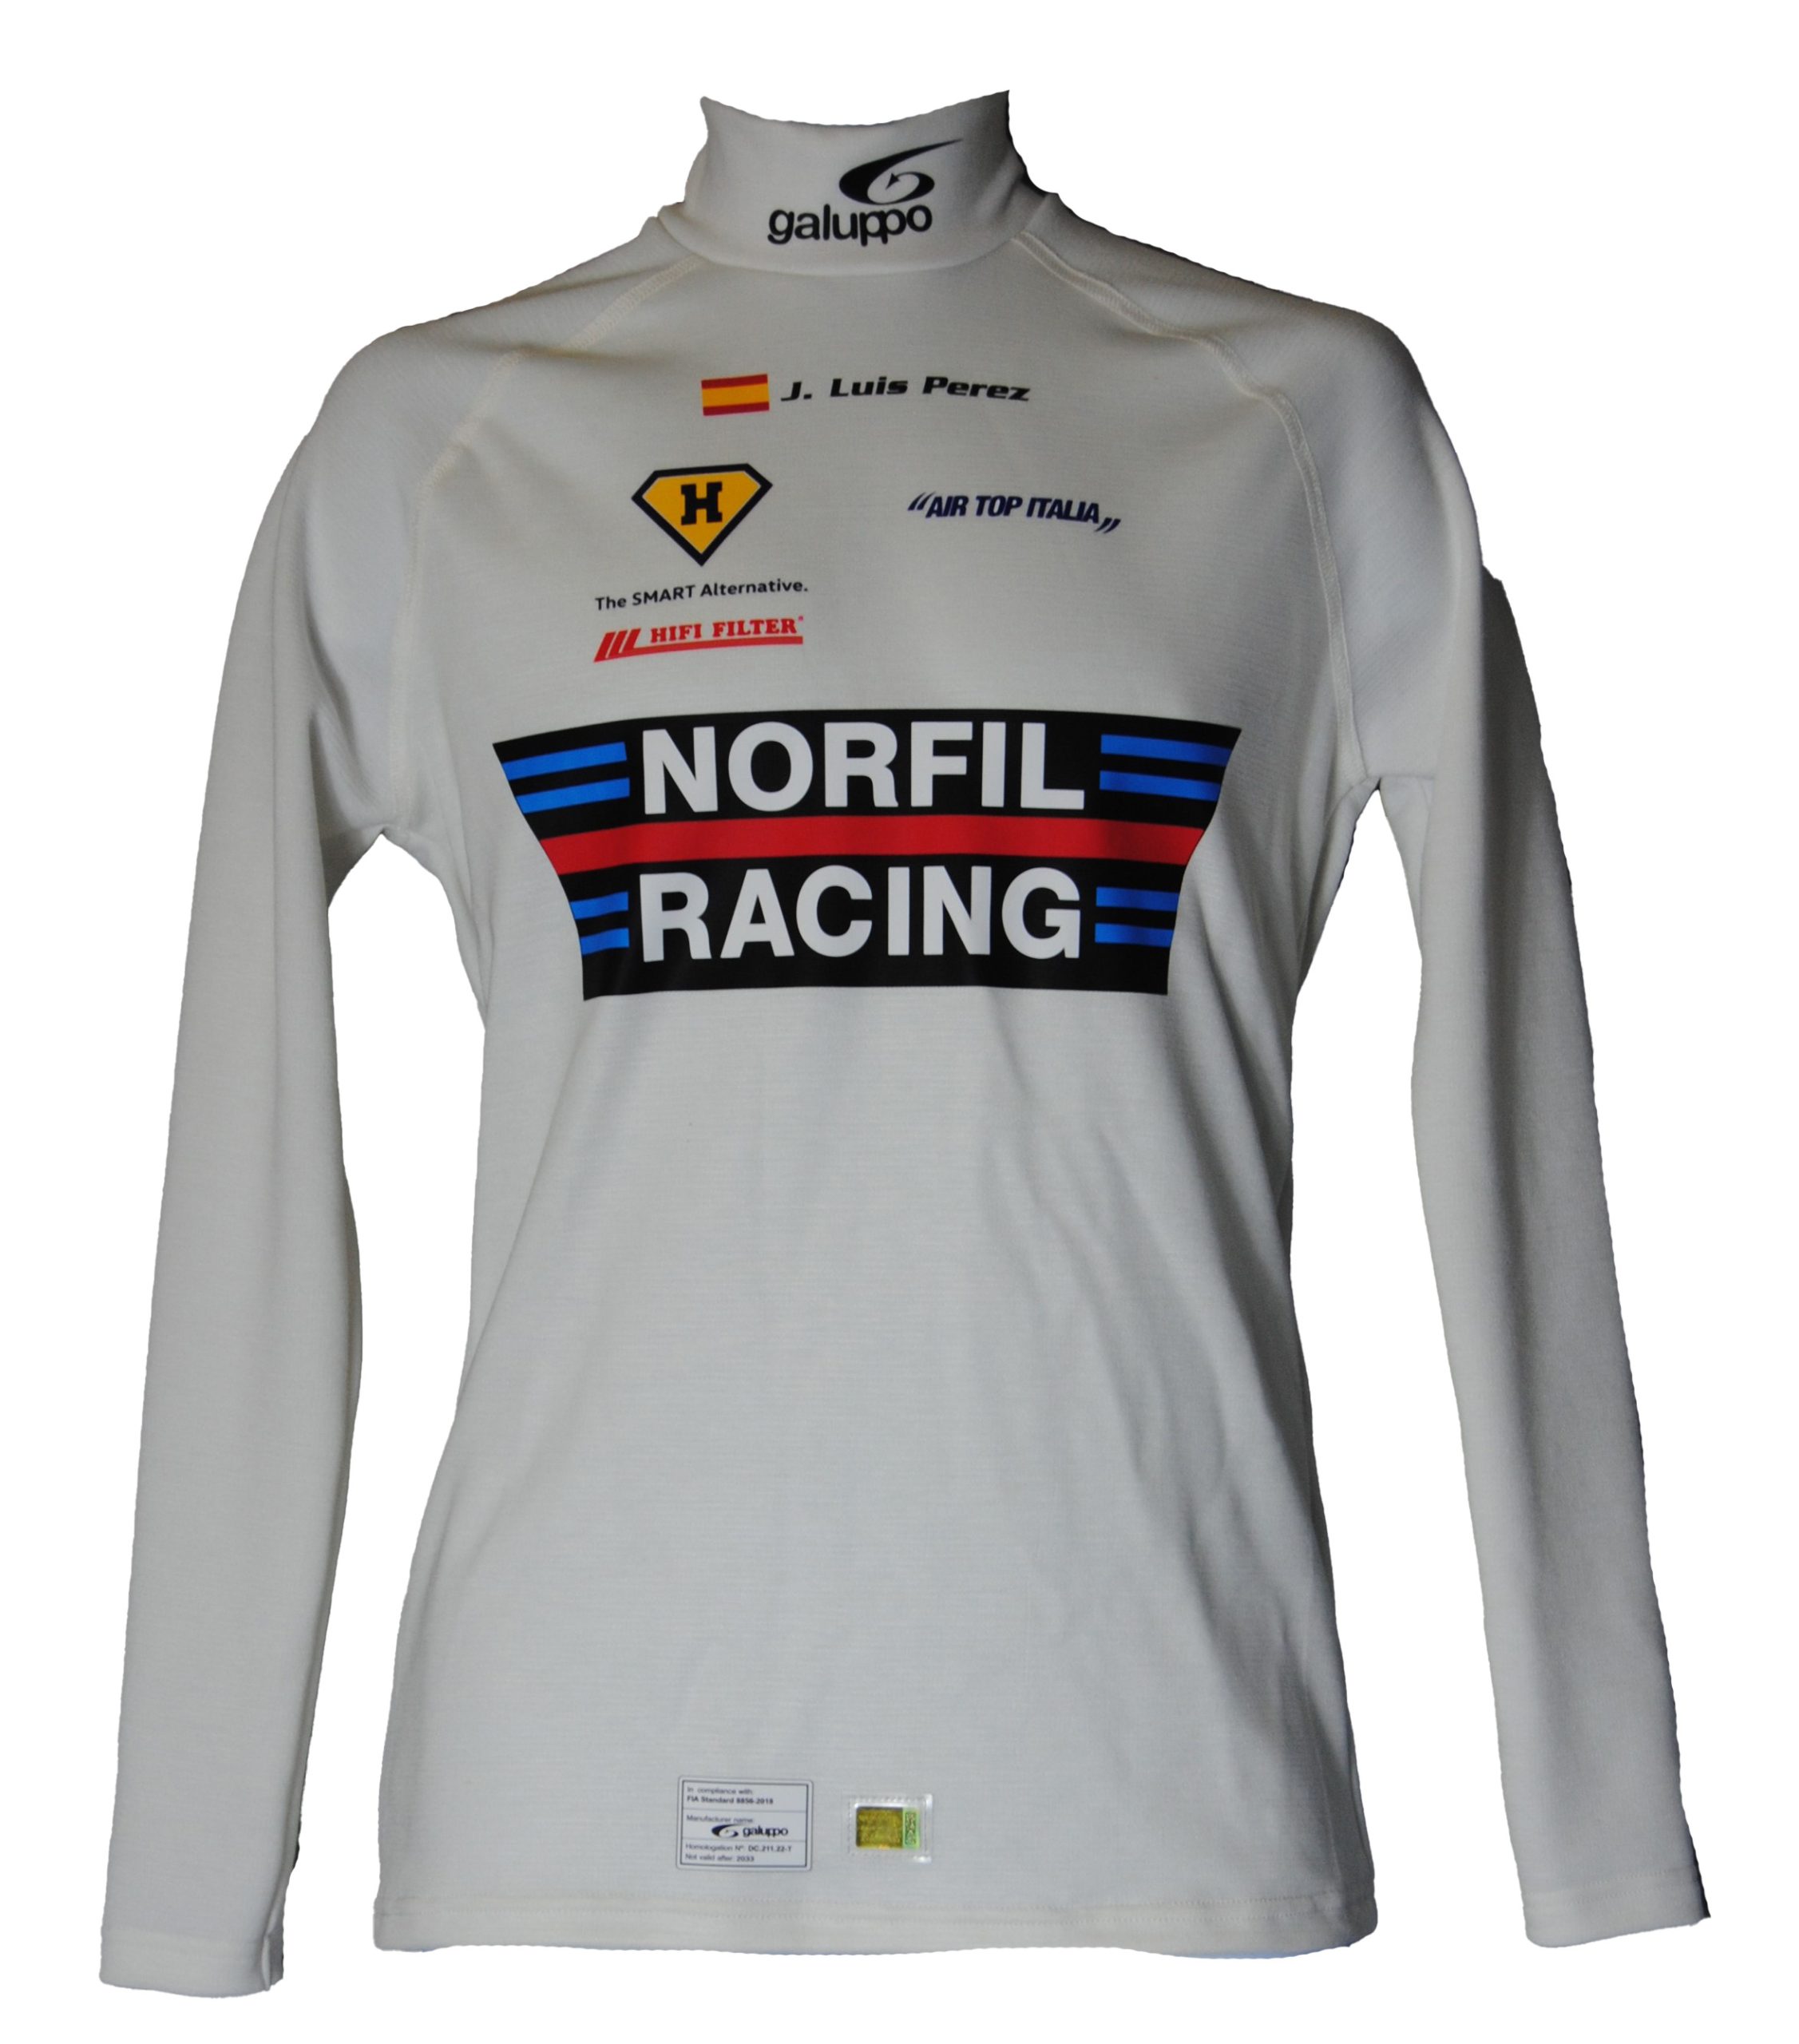 Racing Galuppo camiseta